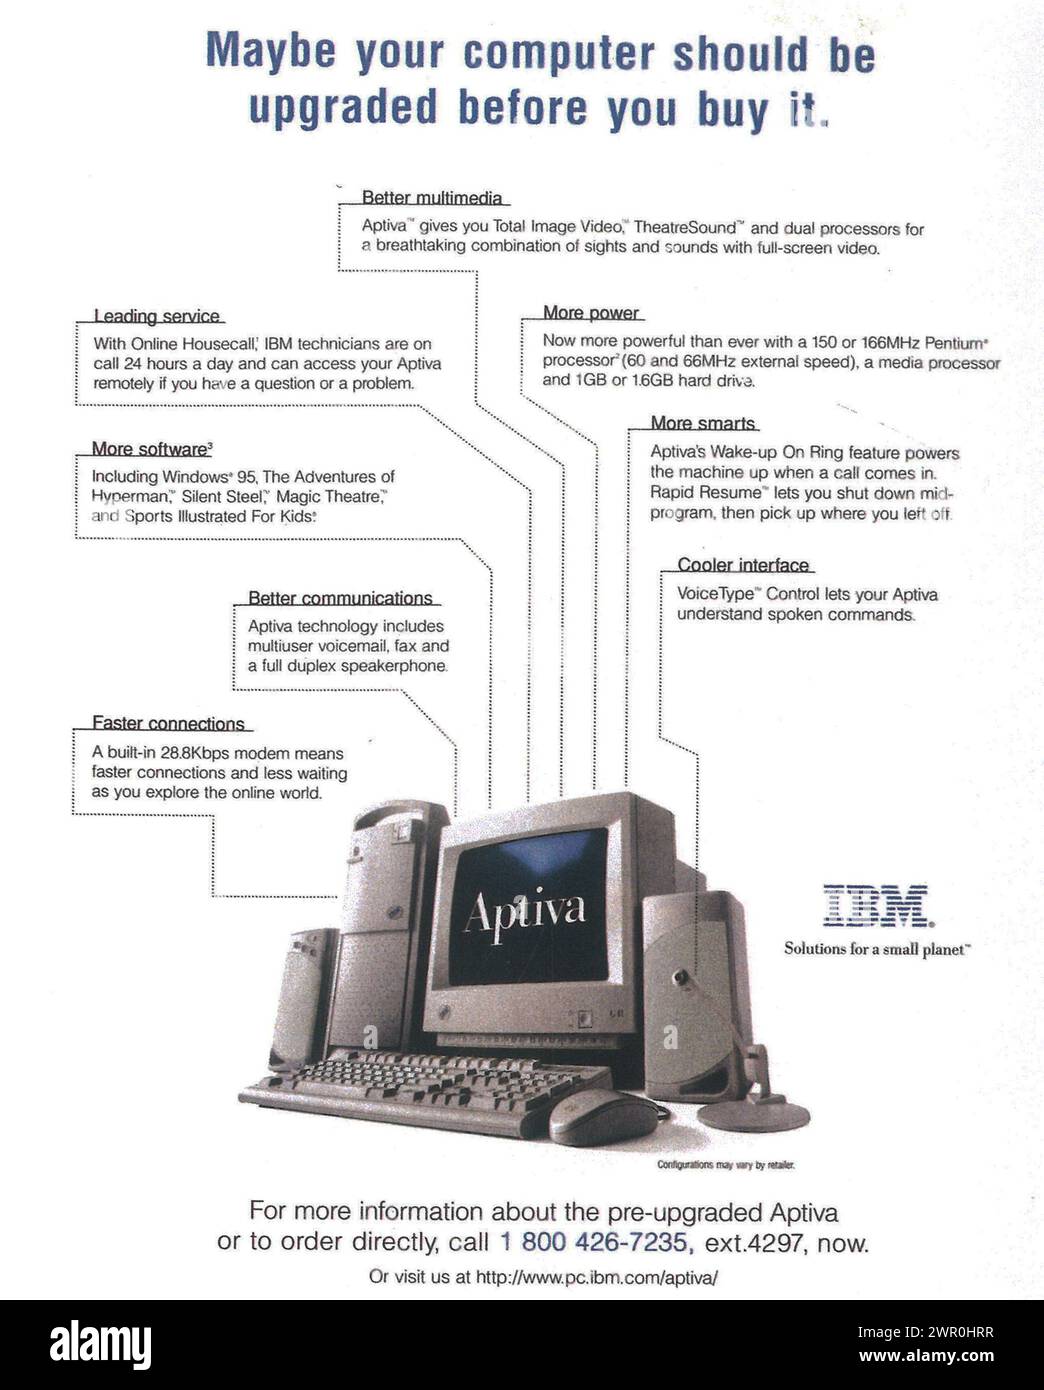 1996 IBM Aptiva Desktop Computer Ad Stock Photo